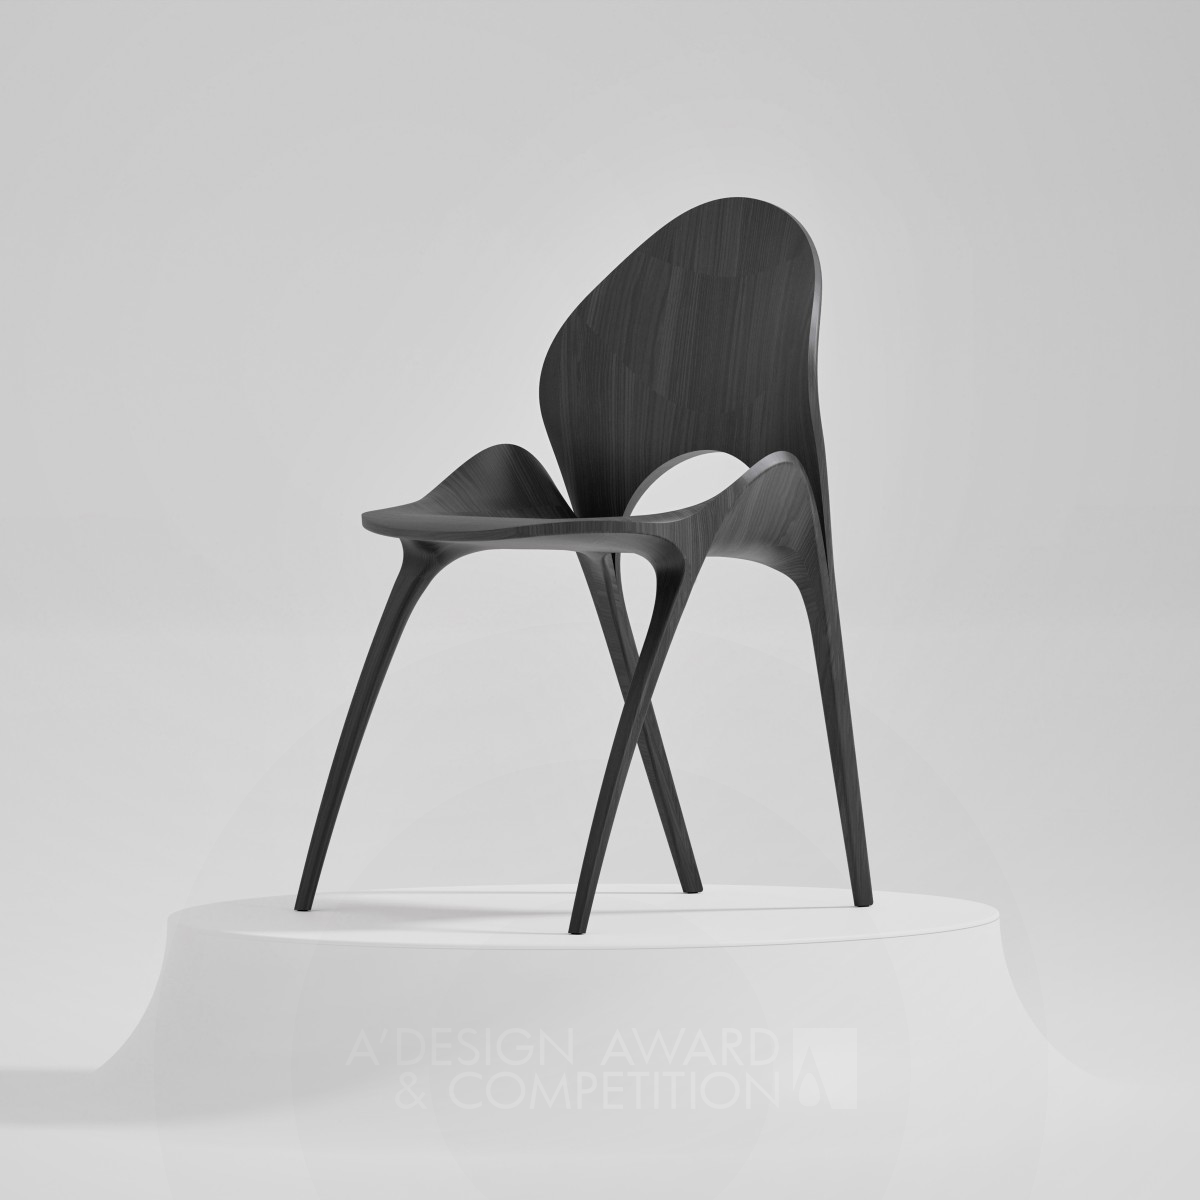 Pablo Vidiella wins Golden at the prestigious A' Furniture Design Award with Hana Chair.